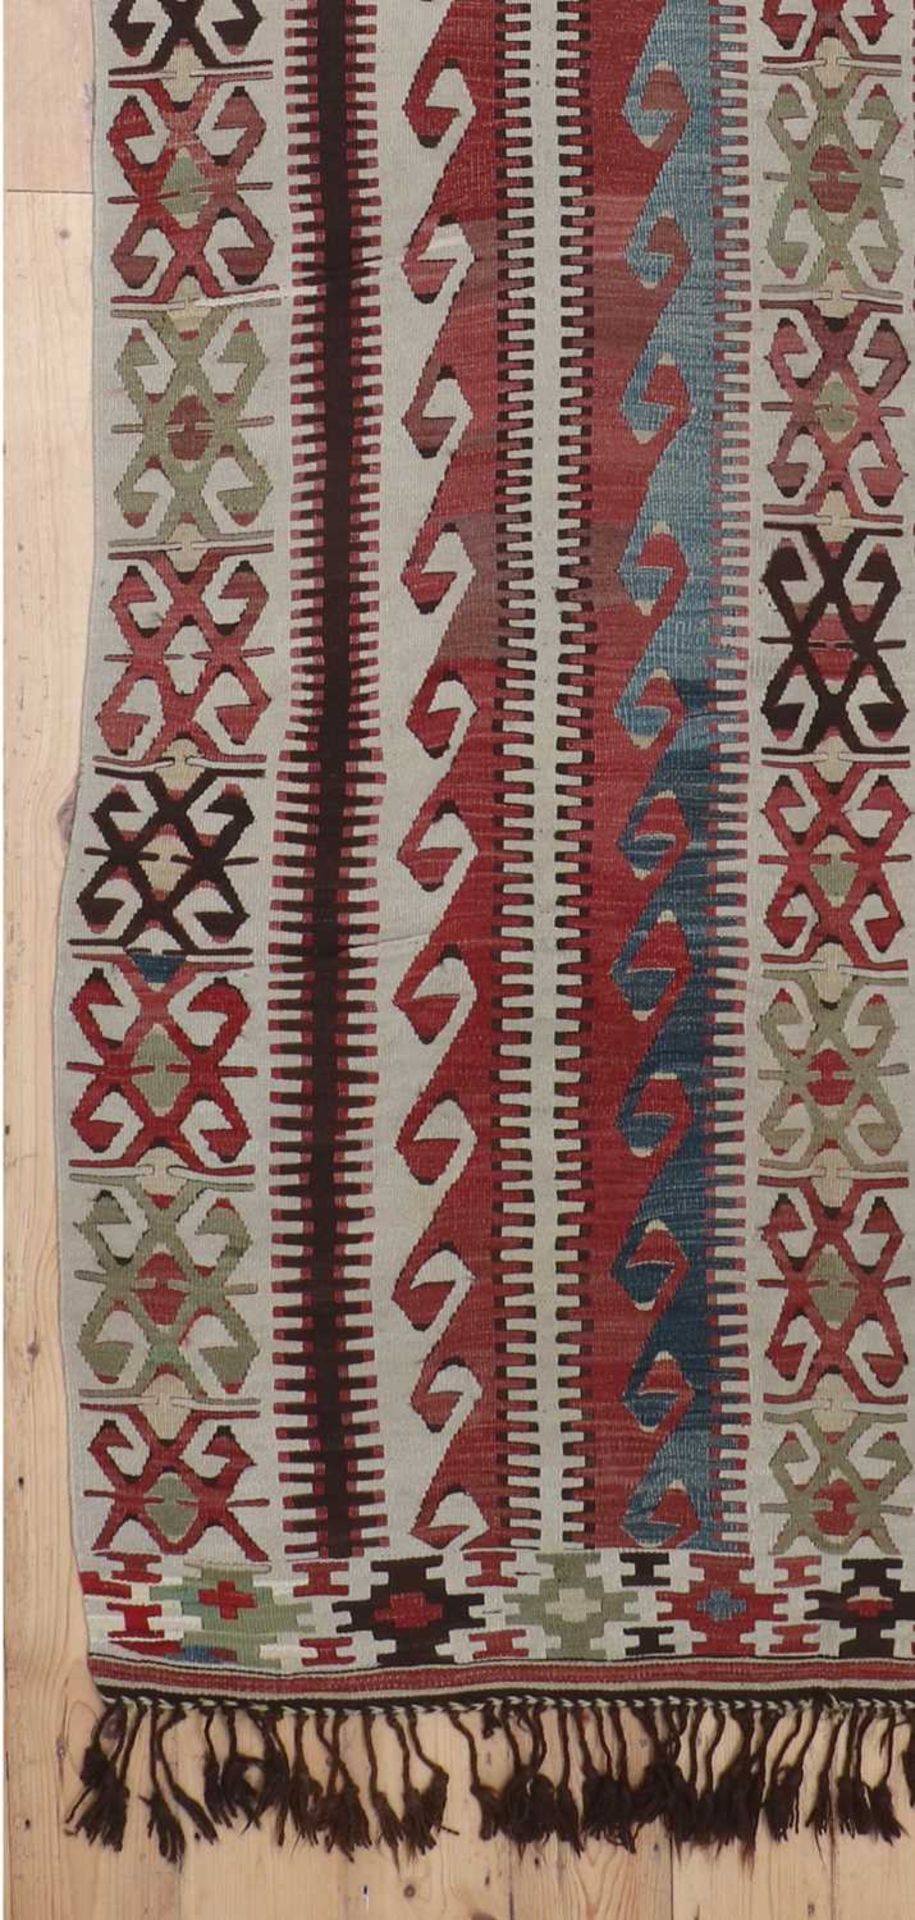 An unusual Kilim rug,